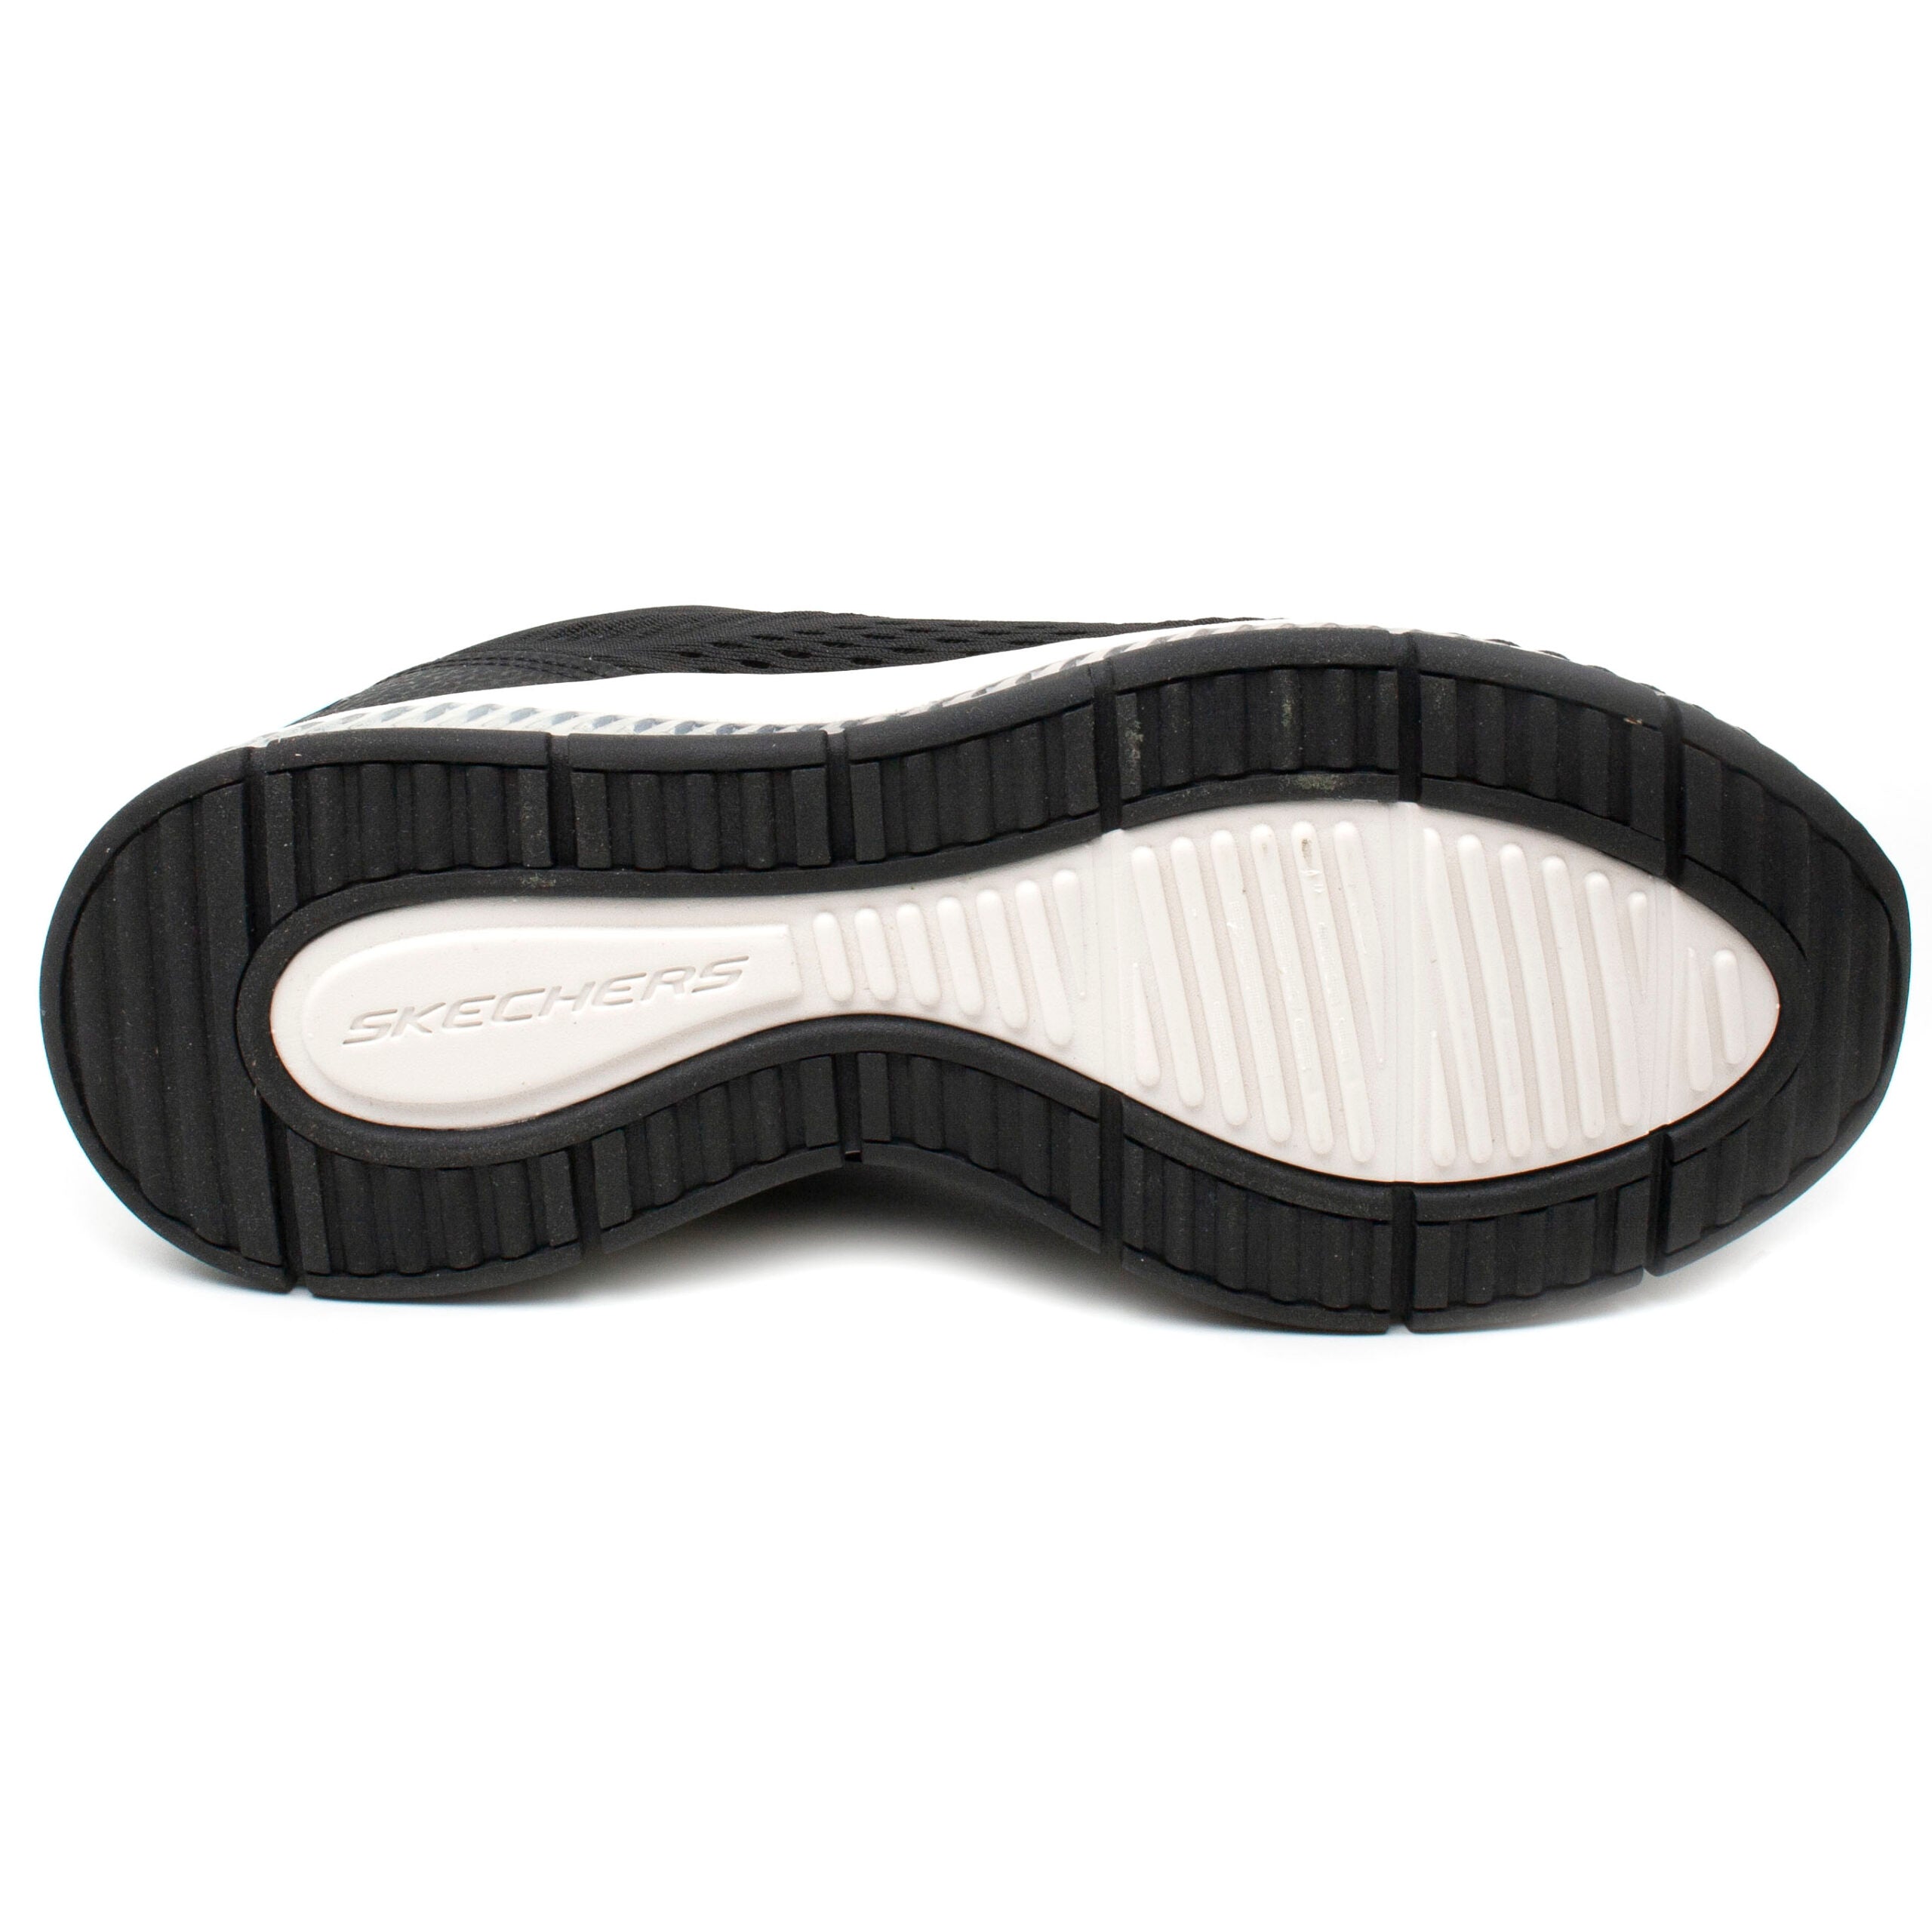 Skechers pantofi dama sport 117101 negru ID2506-NG